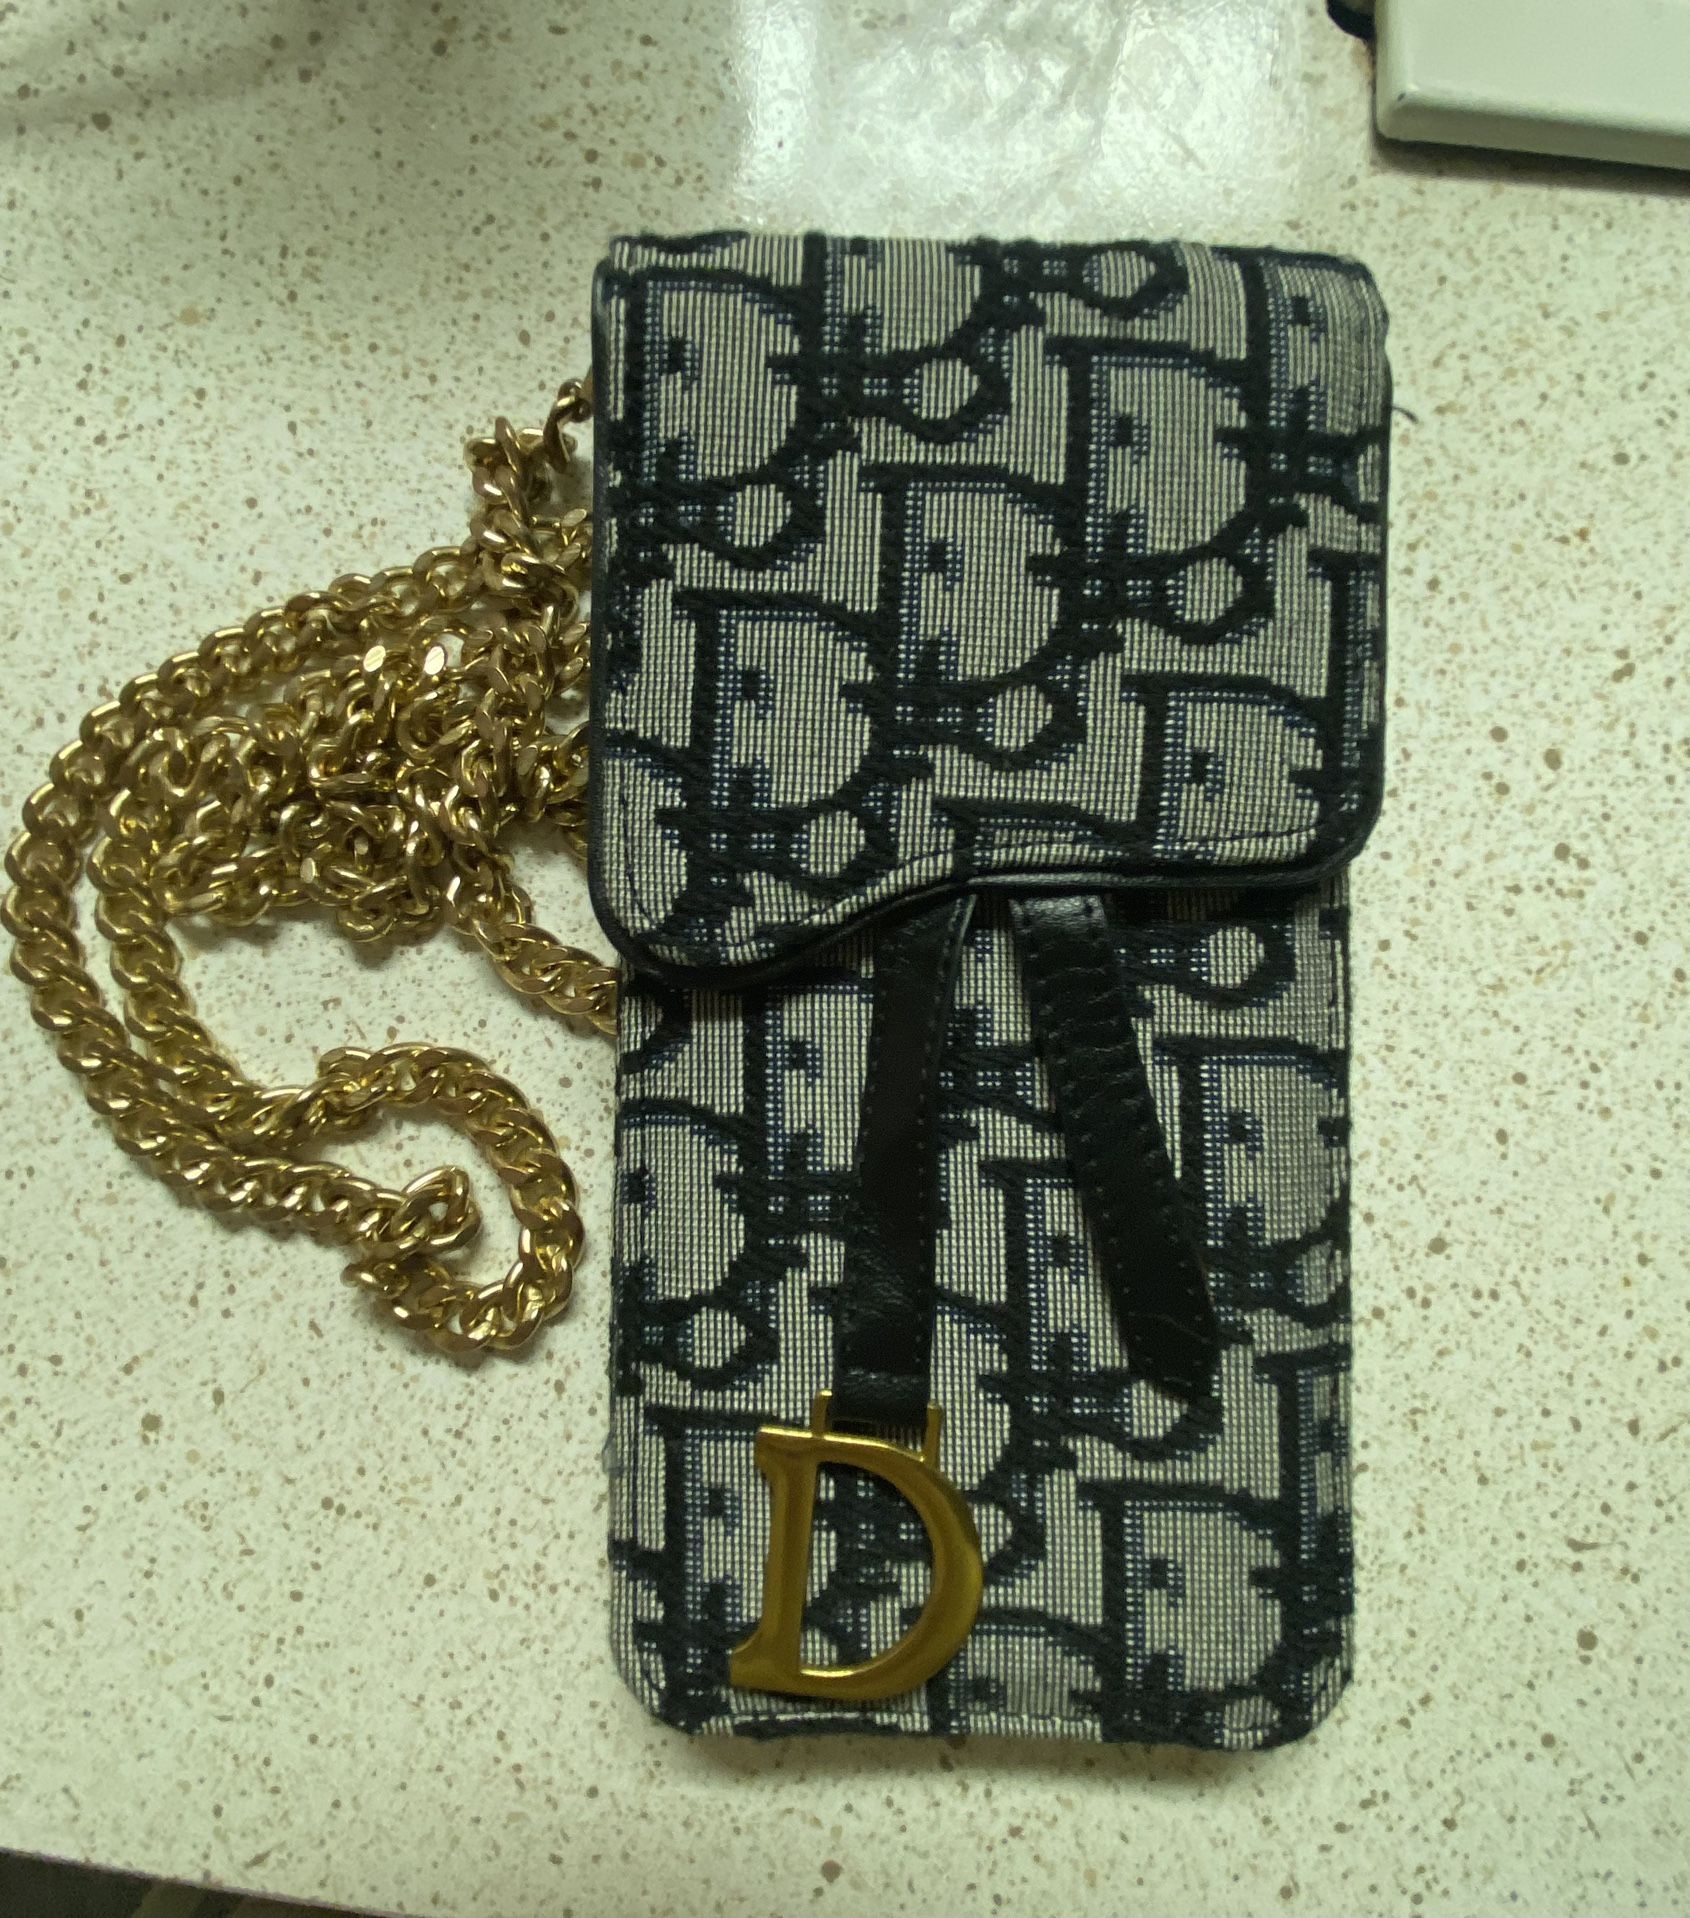 Dior phone bag is a very similar copy